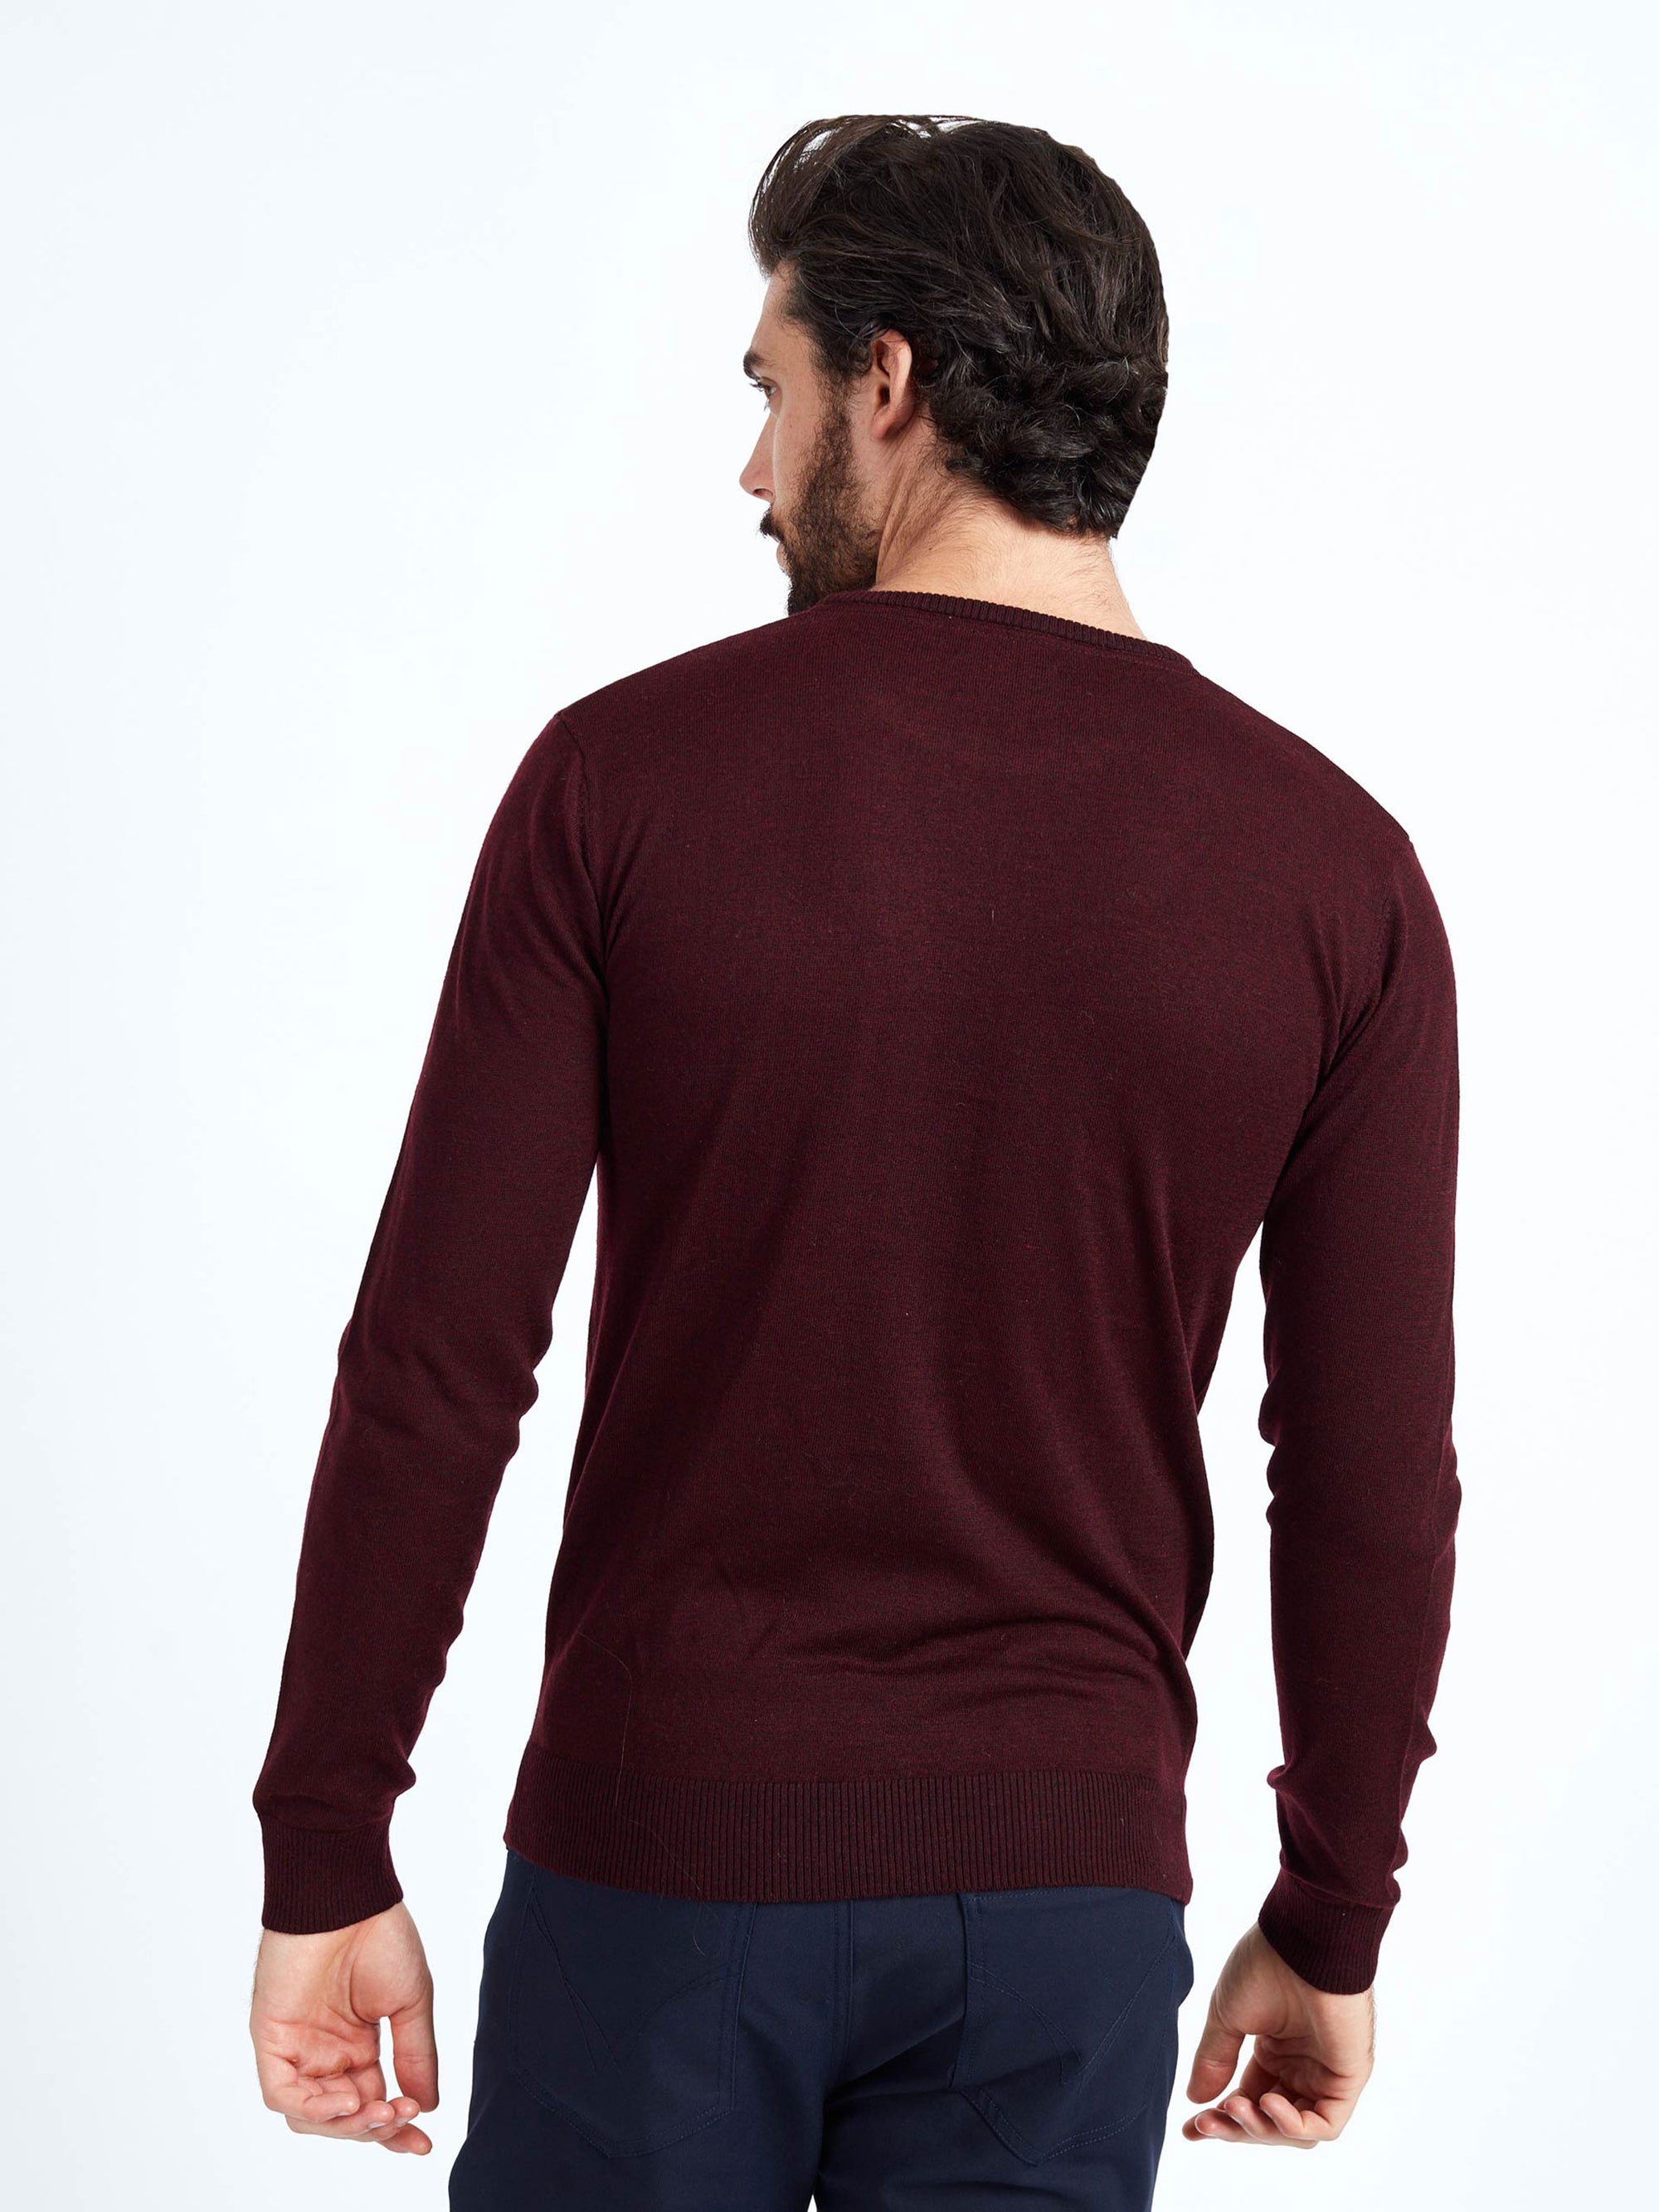 Regular fit wool blend burgundy long sleeve knitted crew neck mish mash